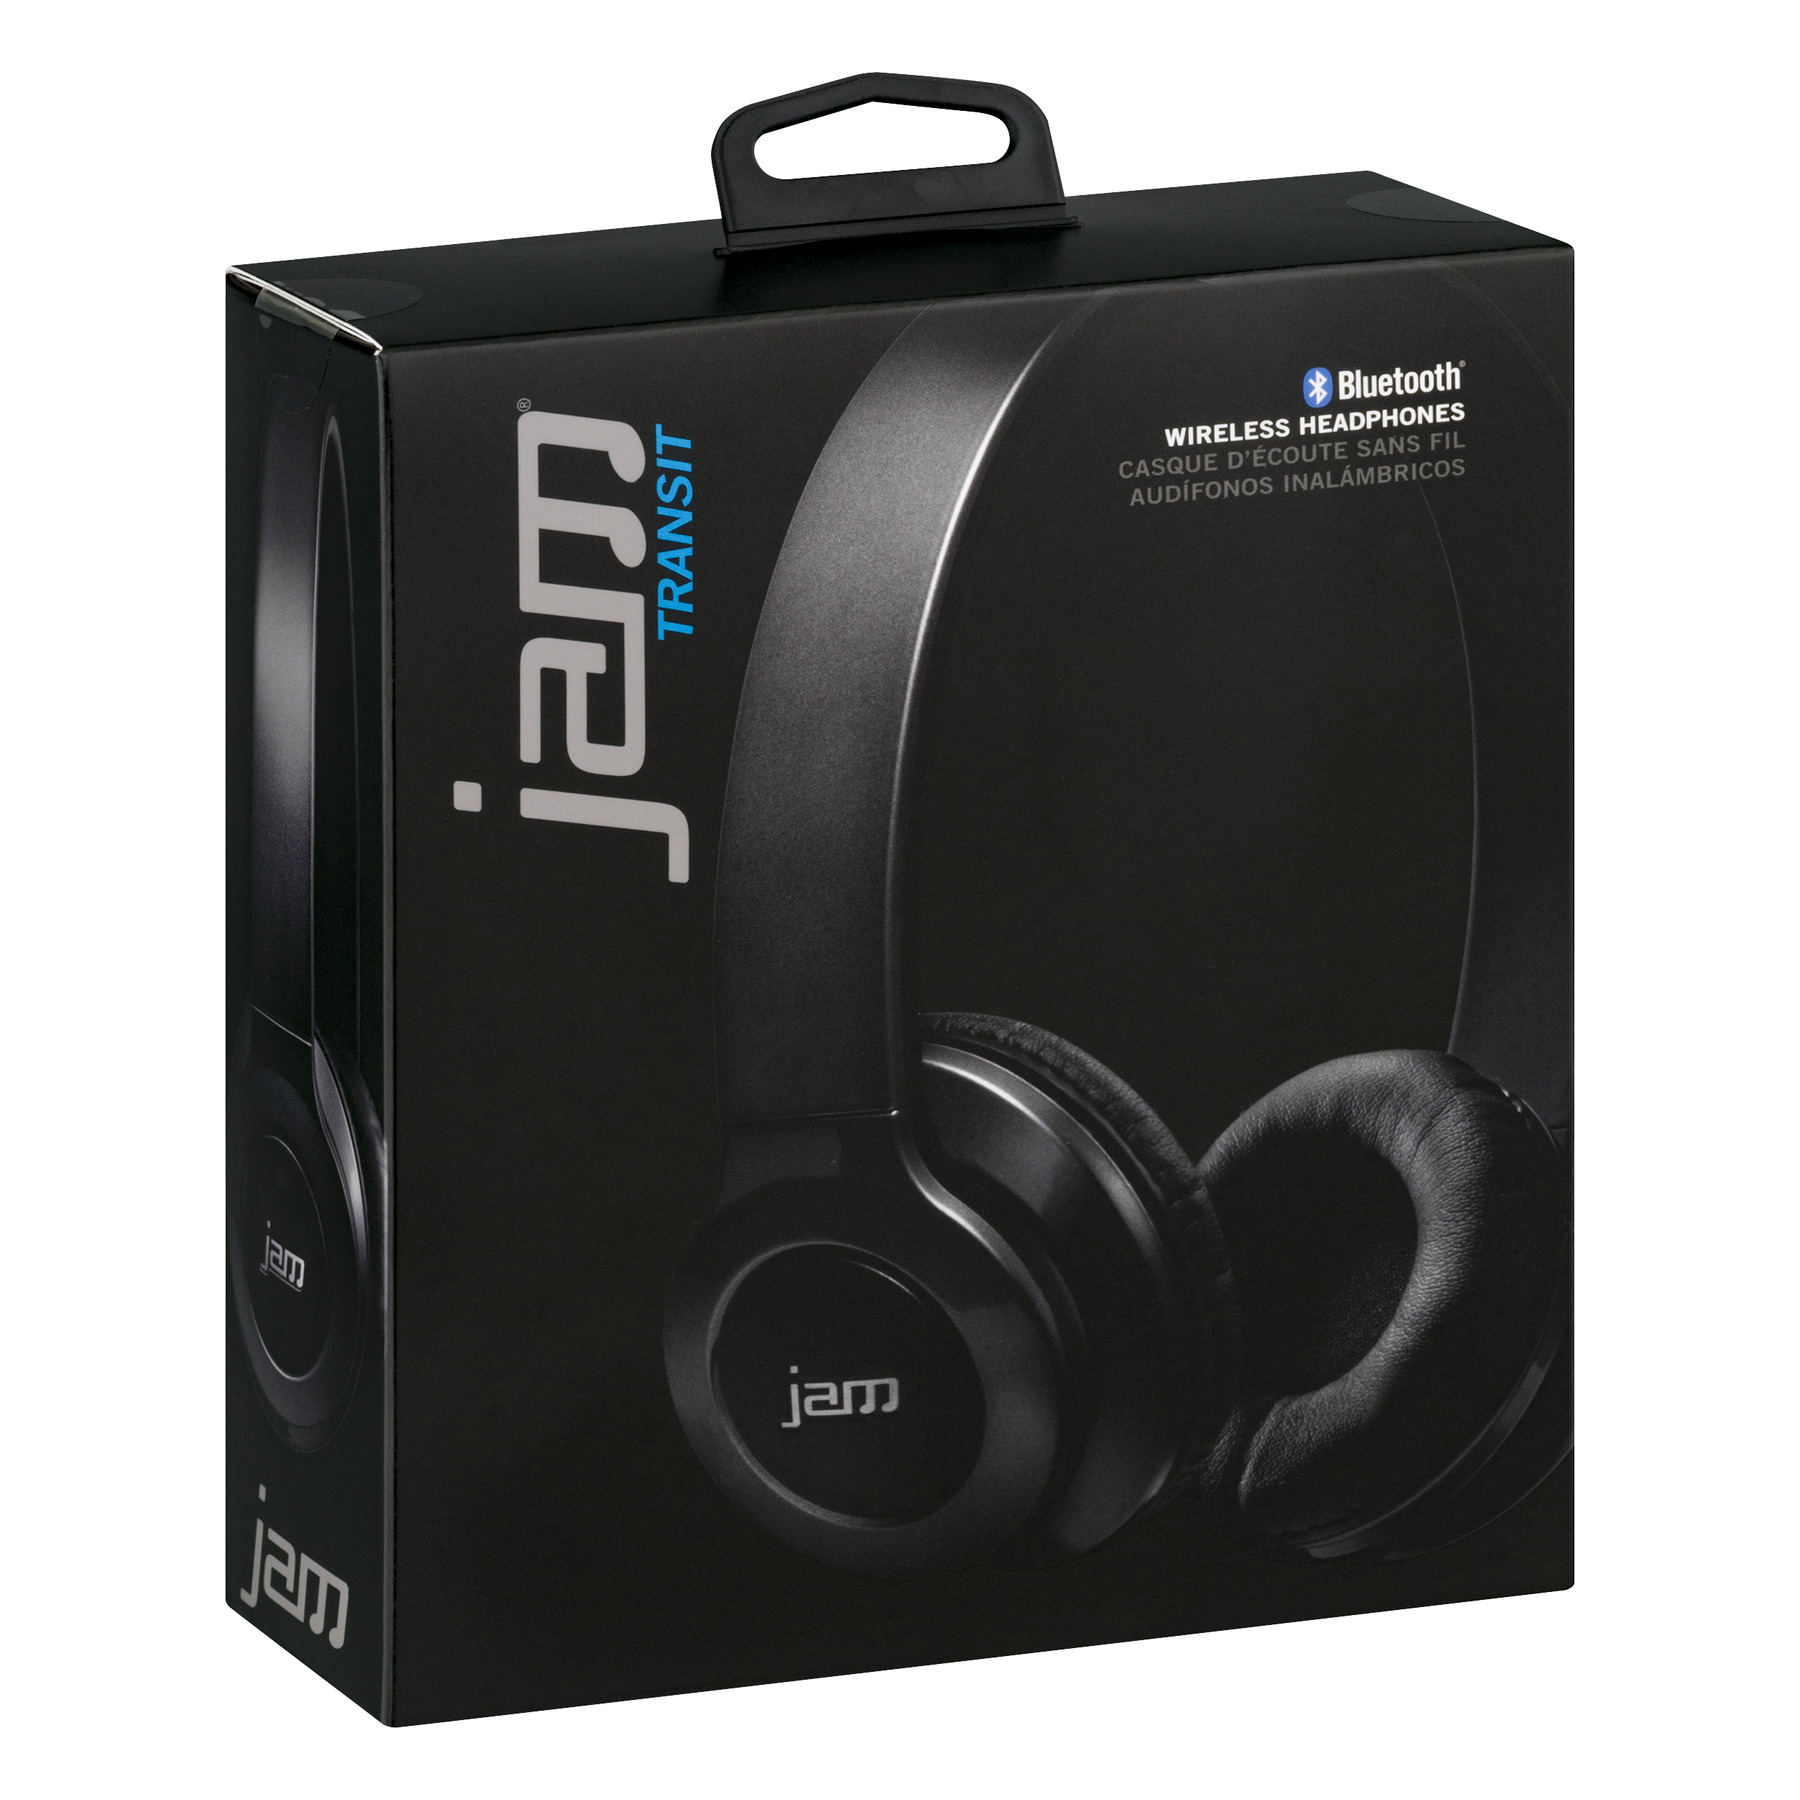 Jam Transit Bluetooth Wireless Headphones, 1.0 CT - image 2 of 8